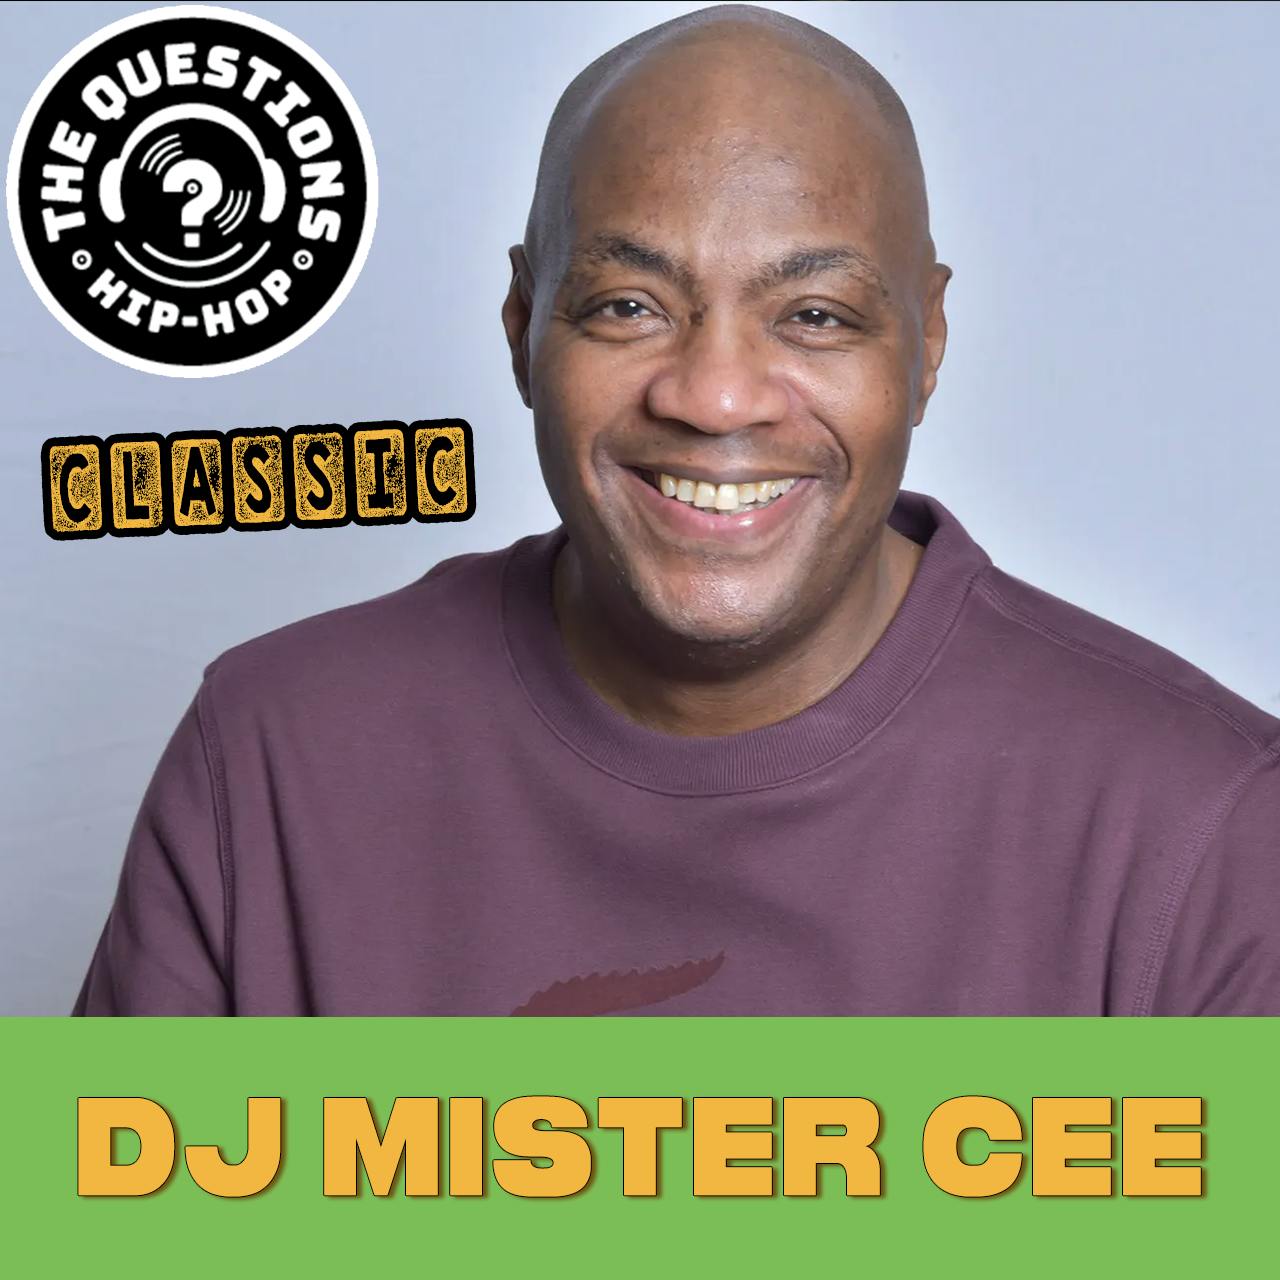 Thank You, DJ Mister Cee